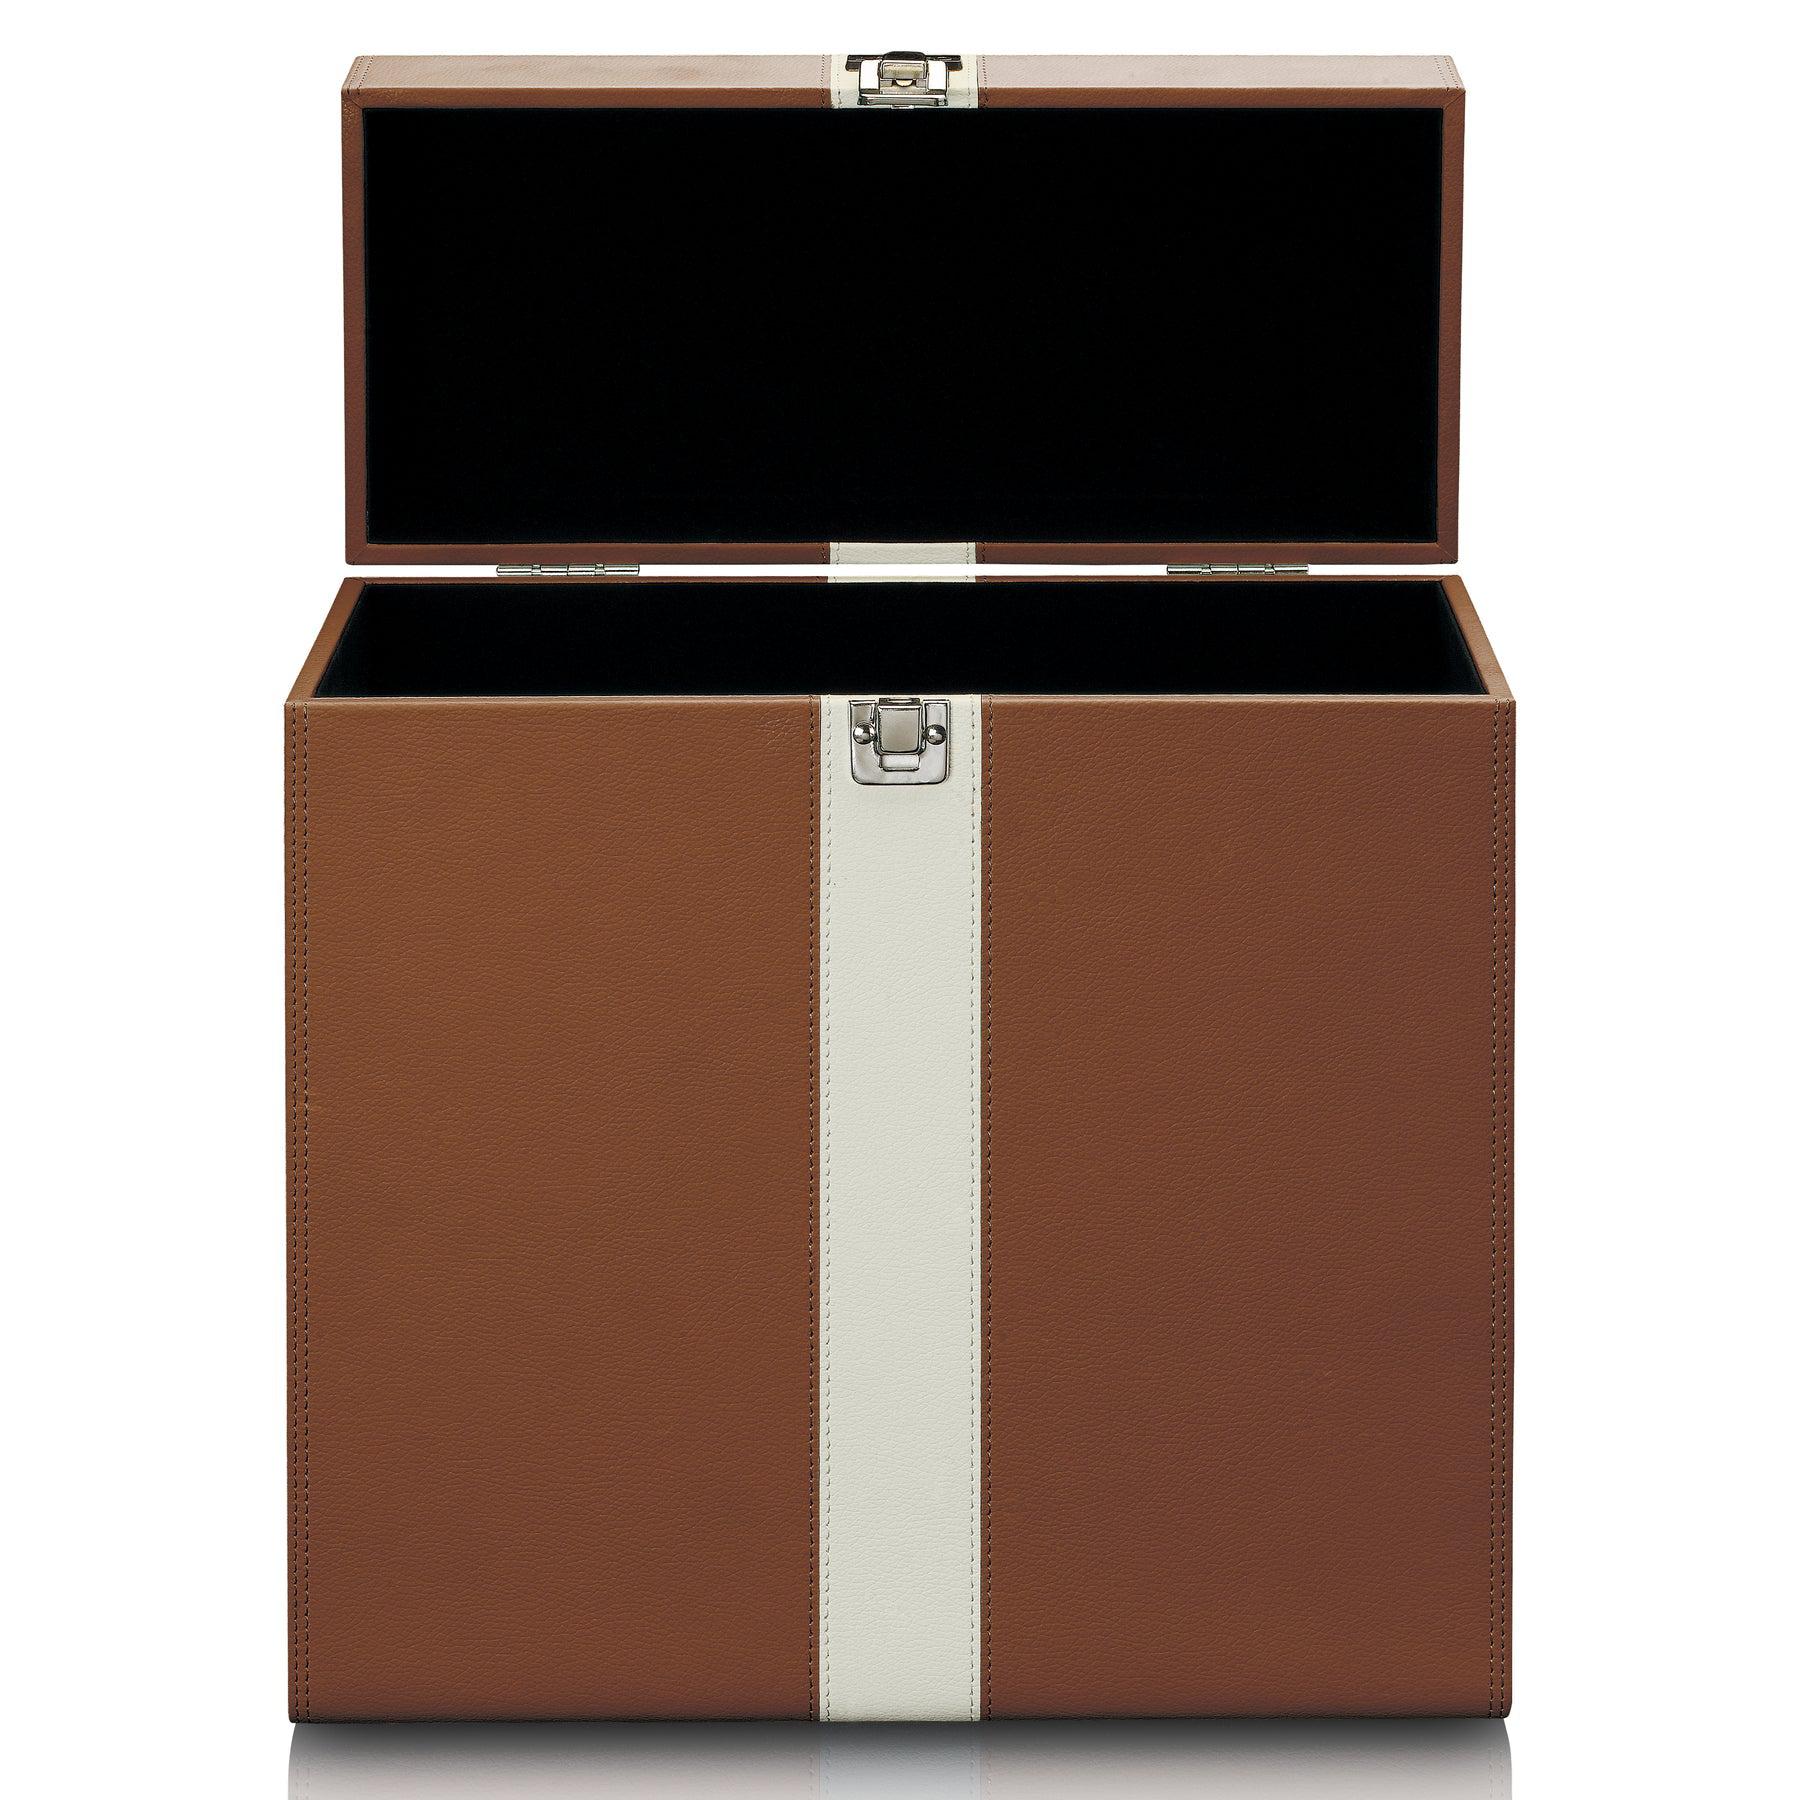 Lenco TTA-300 Record Storage Suitcase - Light Blue / Brown